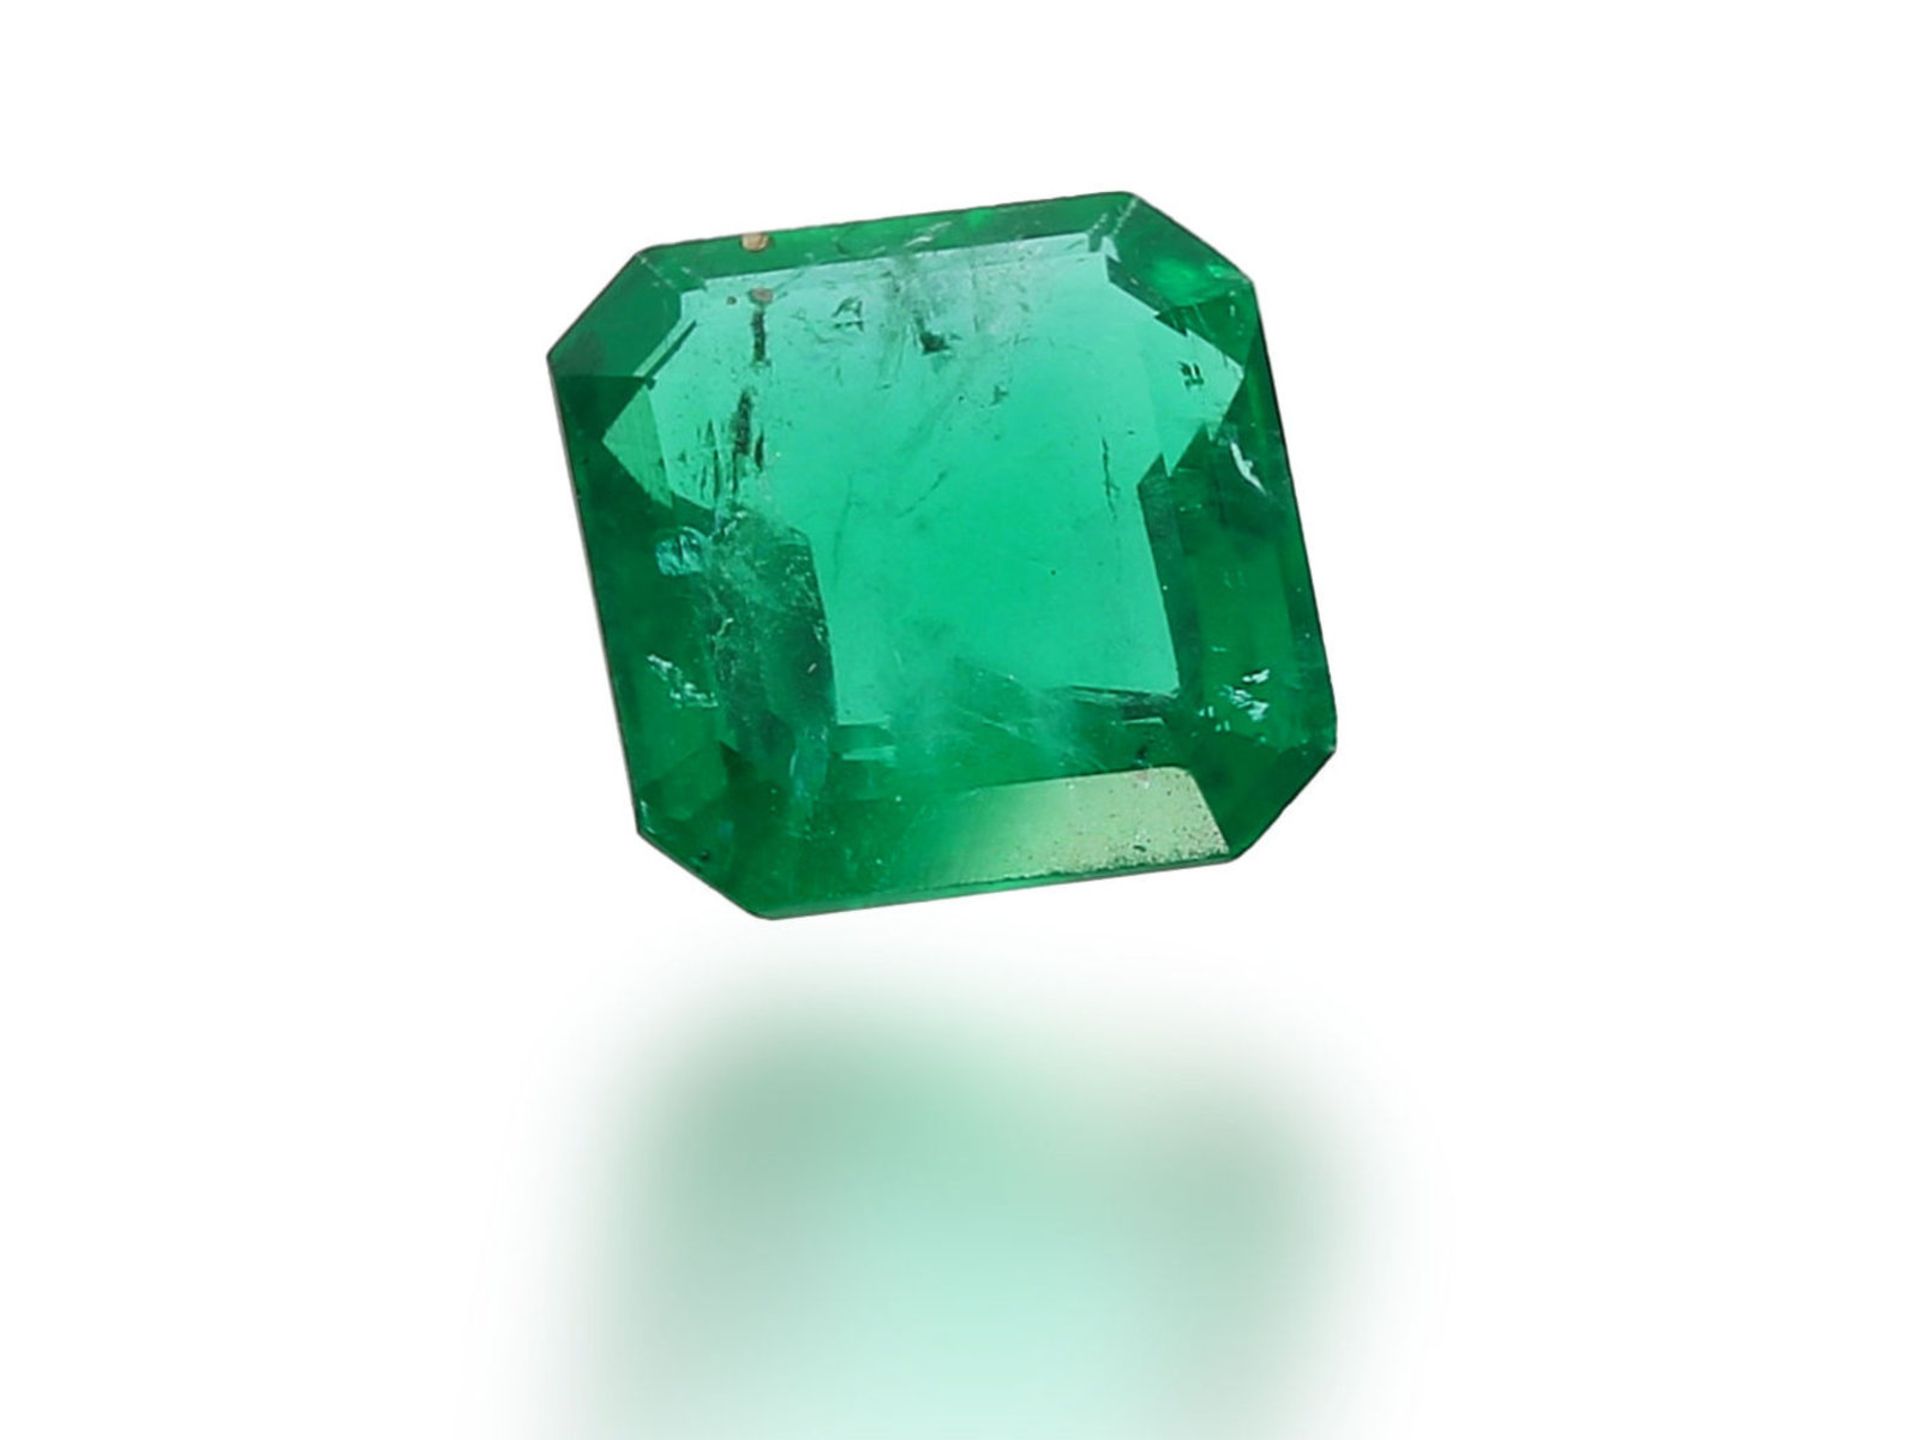 Smaragd: natürlicher Smaragd im Emerald-Cut, sehr gute Farbe, ca. 1,45ct, Herkunft Columbien